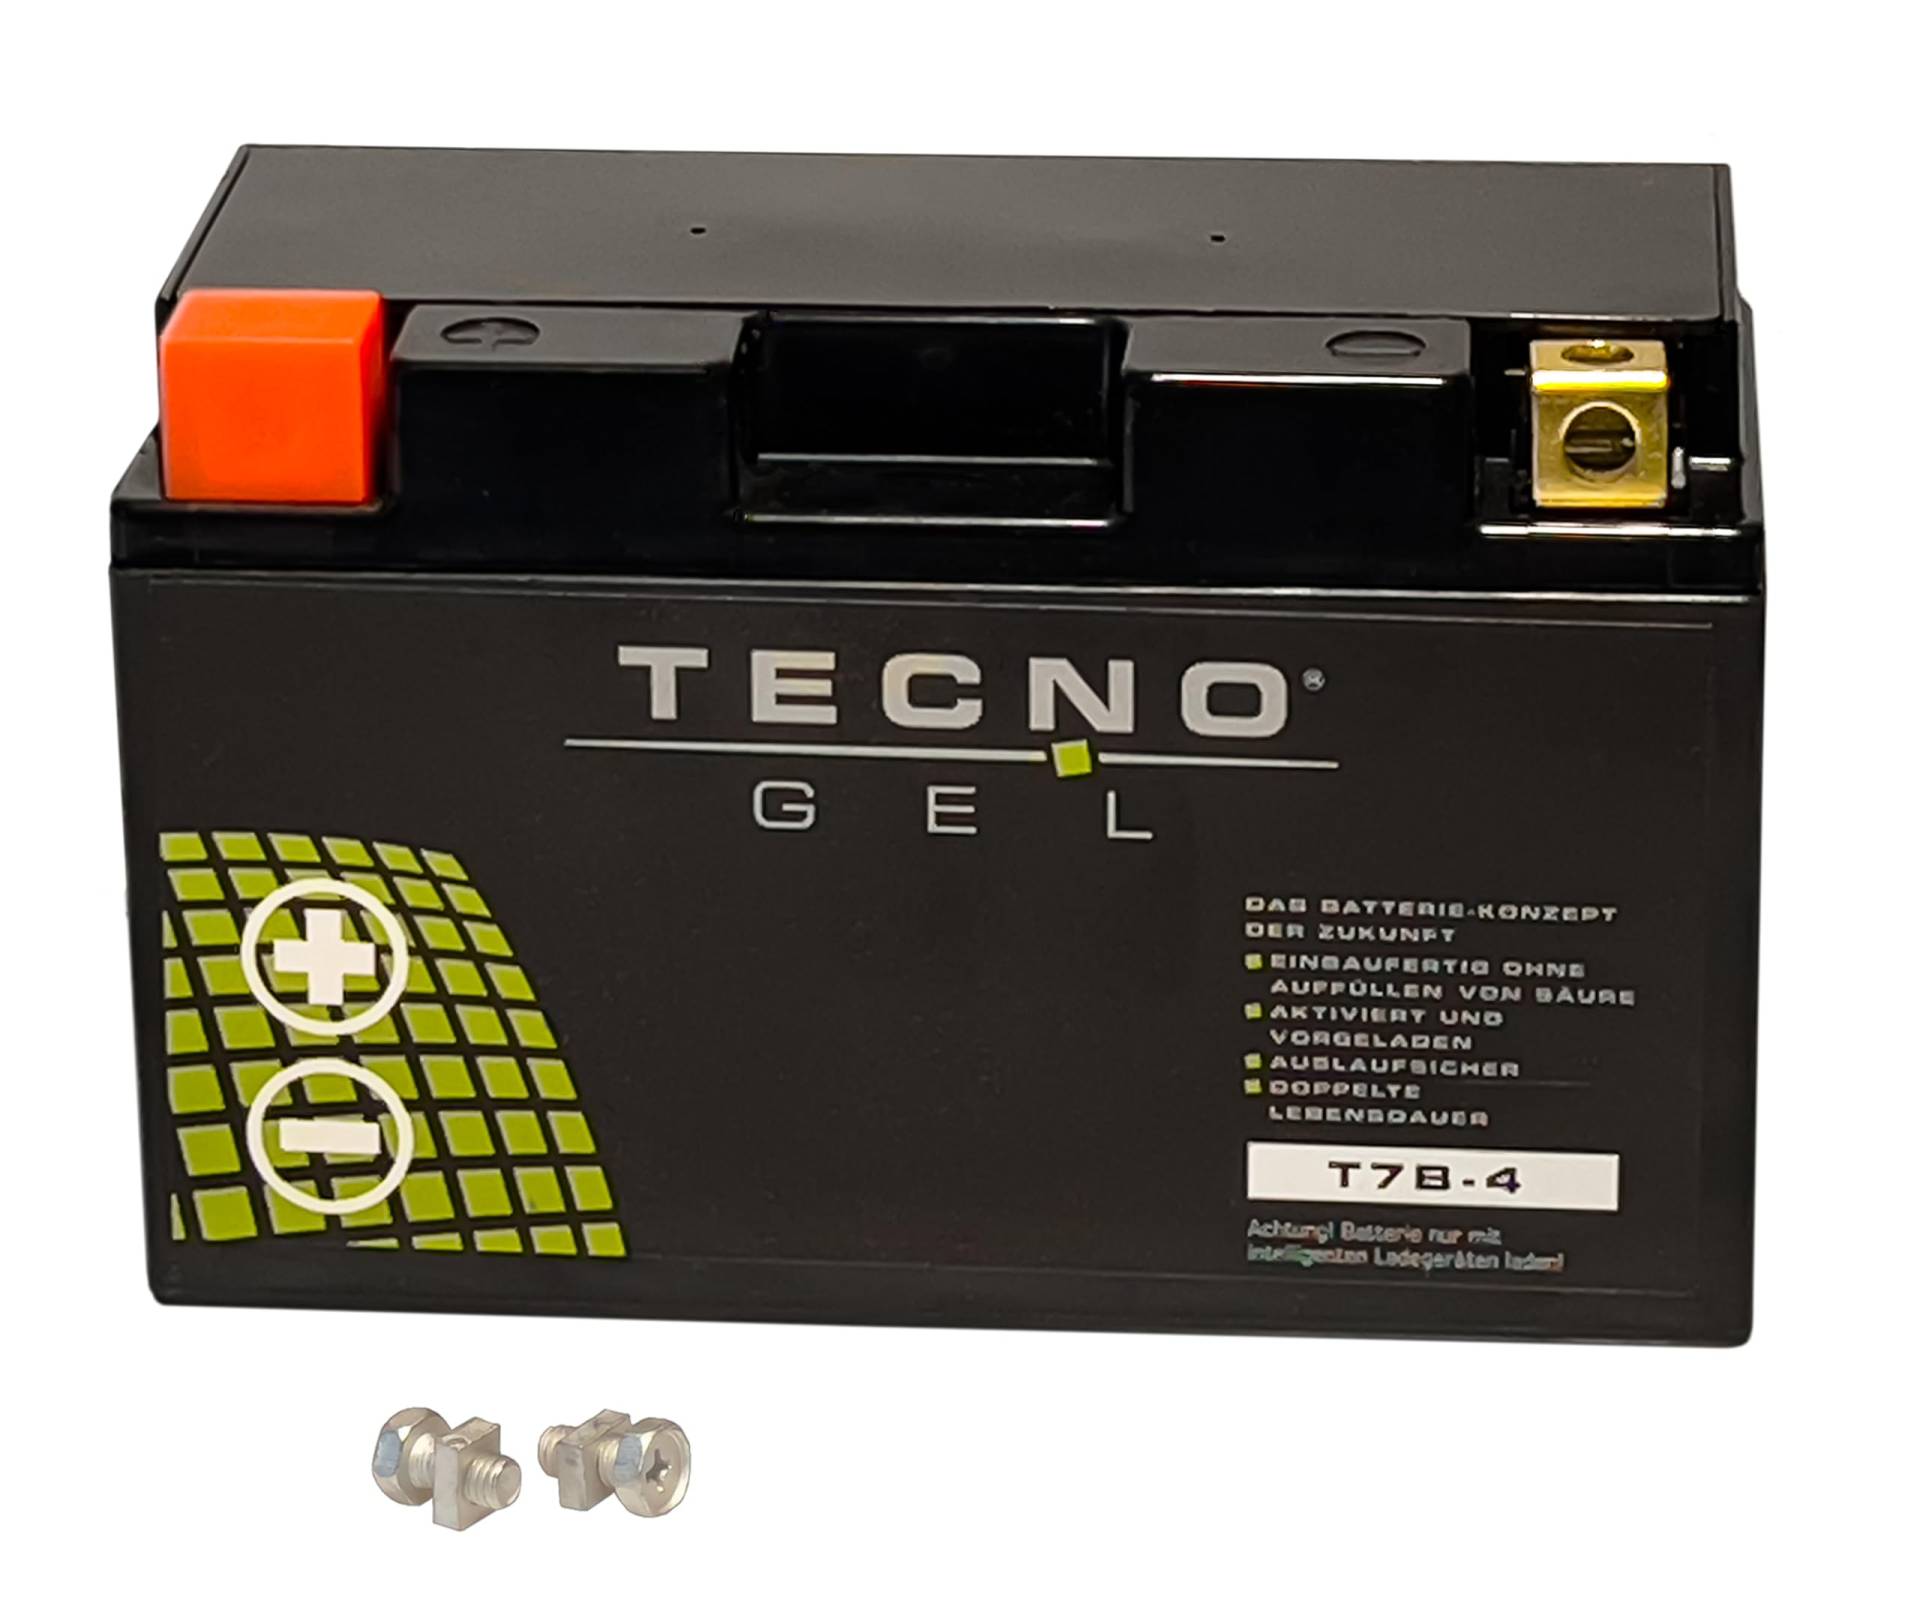 TECNO-GEL Motorrad-Batterie für YT7B-4 = YT7B-BS, 12V Gel-Batterie 7Ah (DIN 50790), 150x65x92 mm von Wirth-Federn